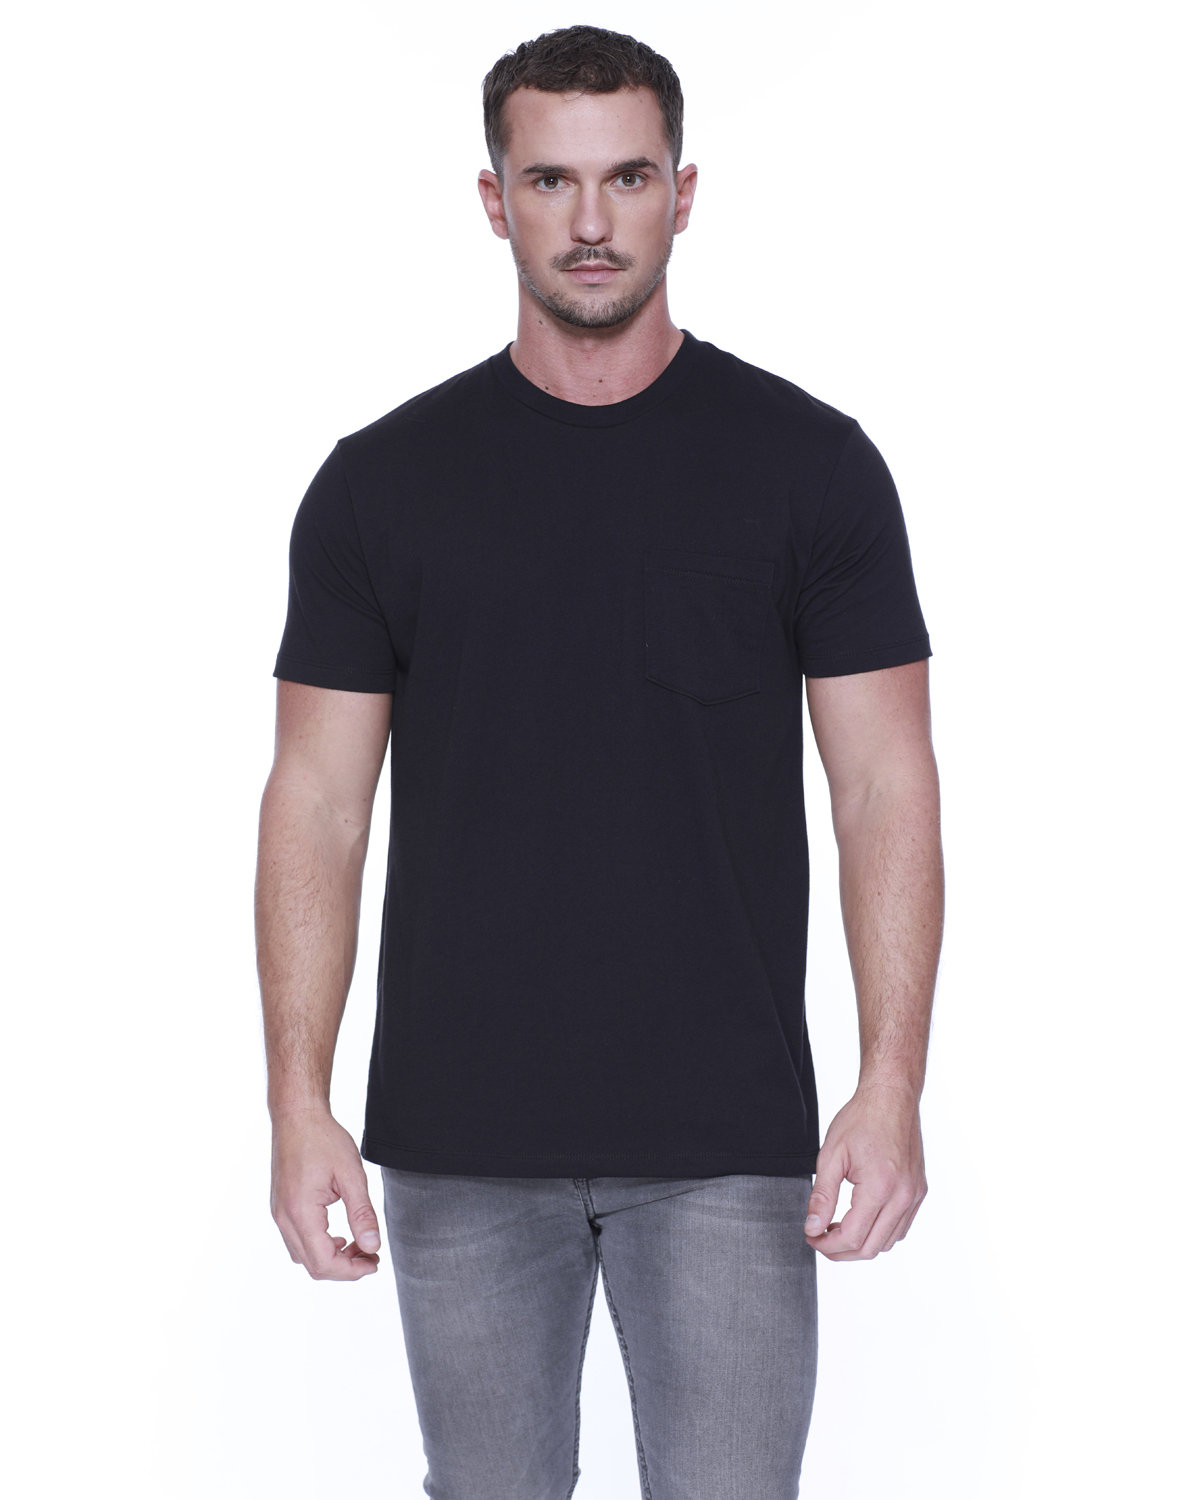 StarTee Men's CVC Pocket T-Shirt BLACK 